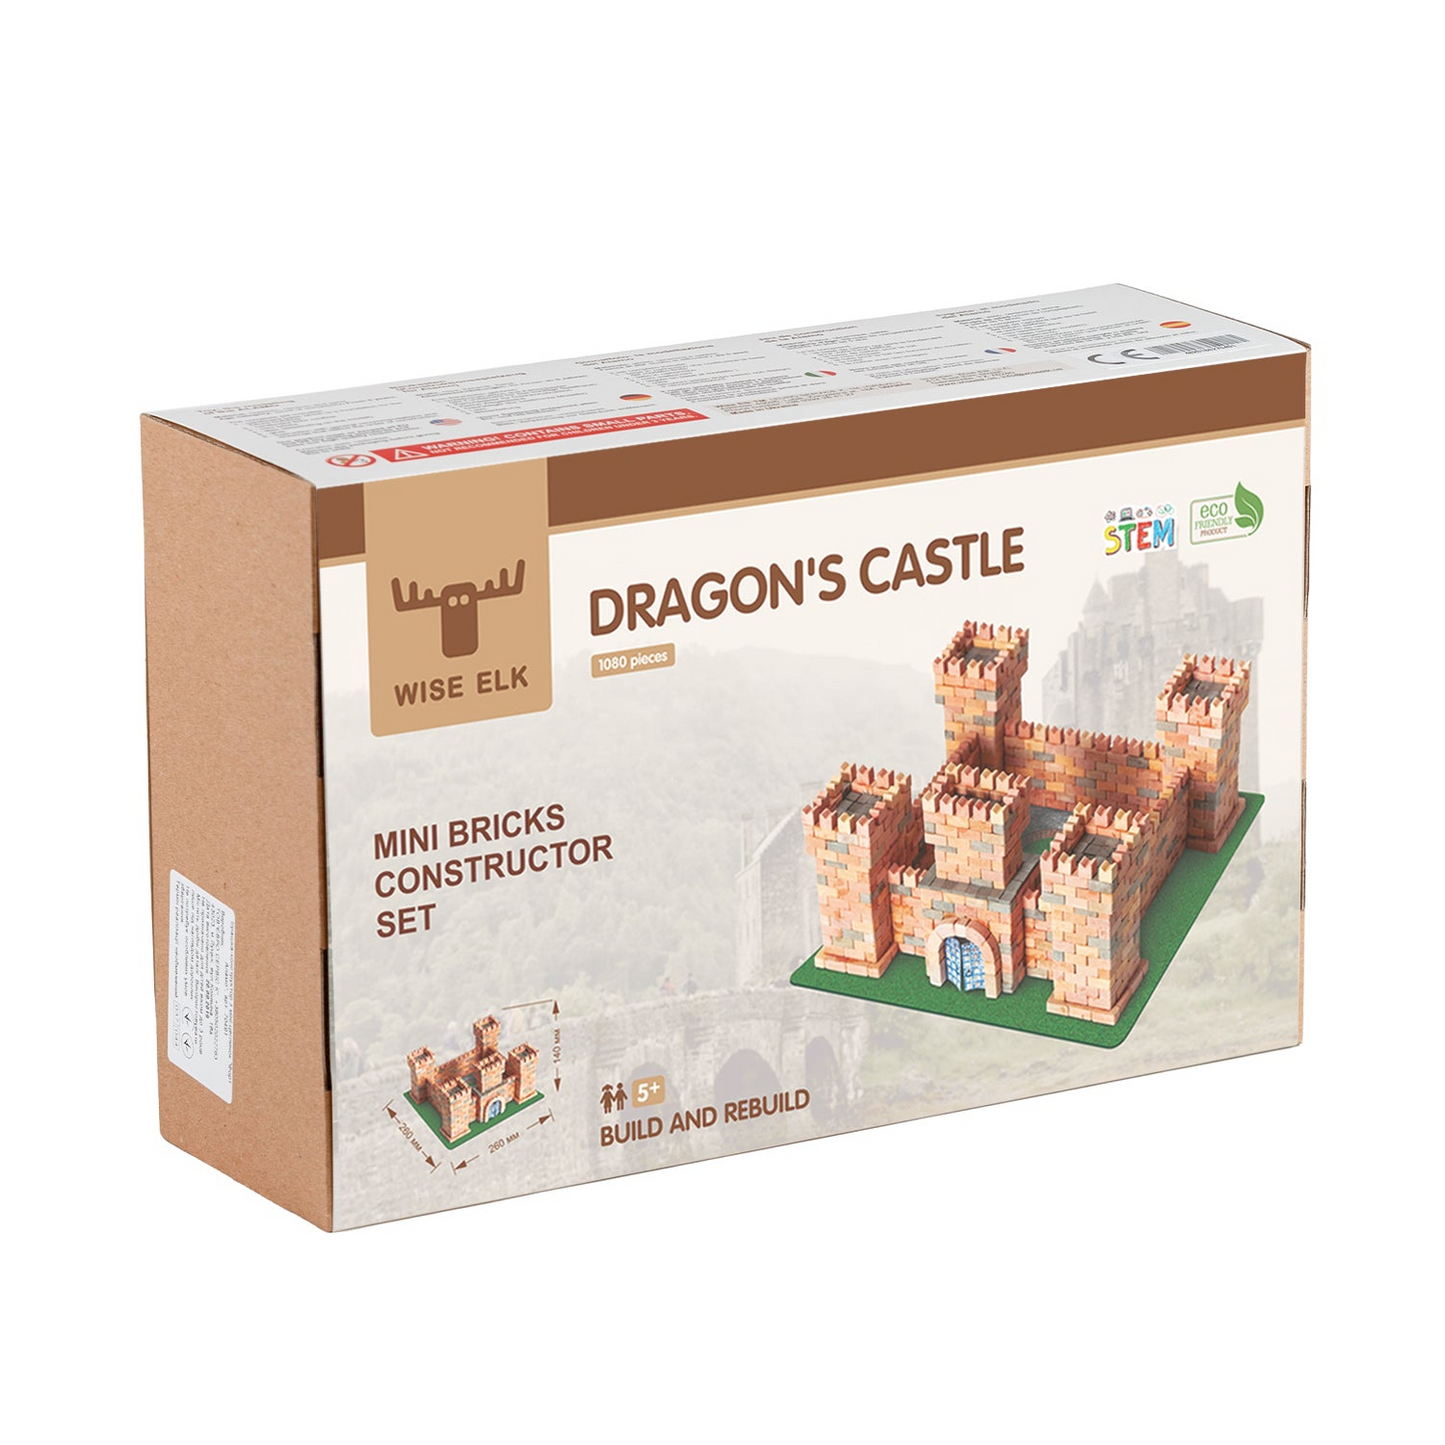 Mini Bricks Construction Set - Dragon's Castle, Goodies N Stuff